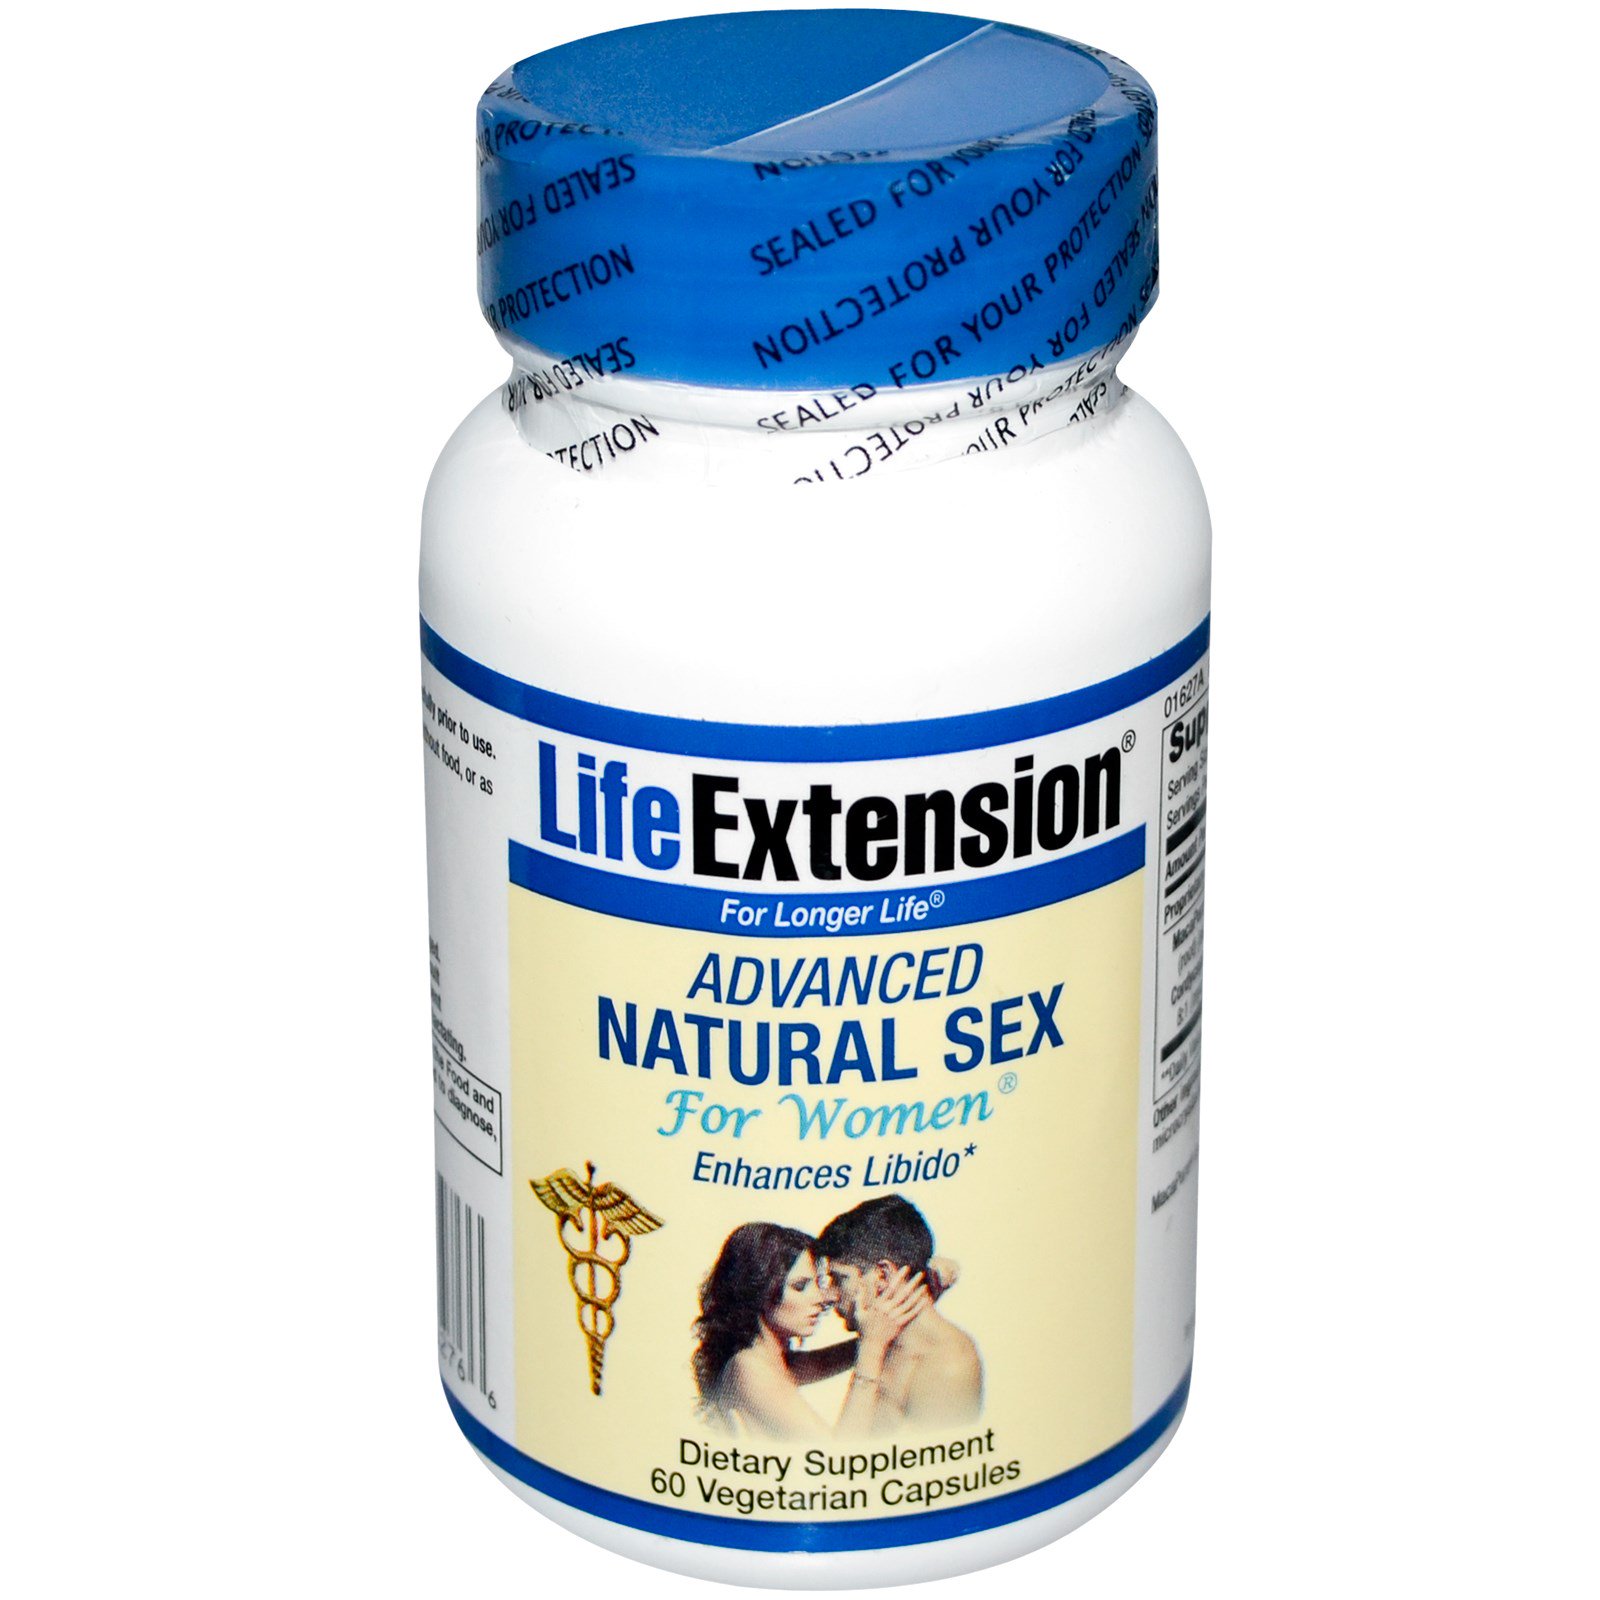 Natural sex supplements